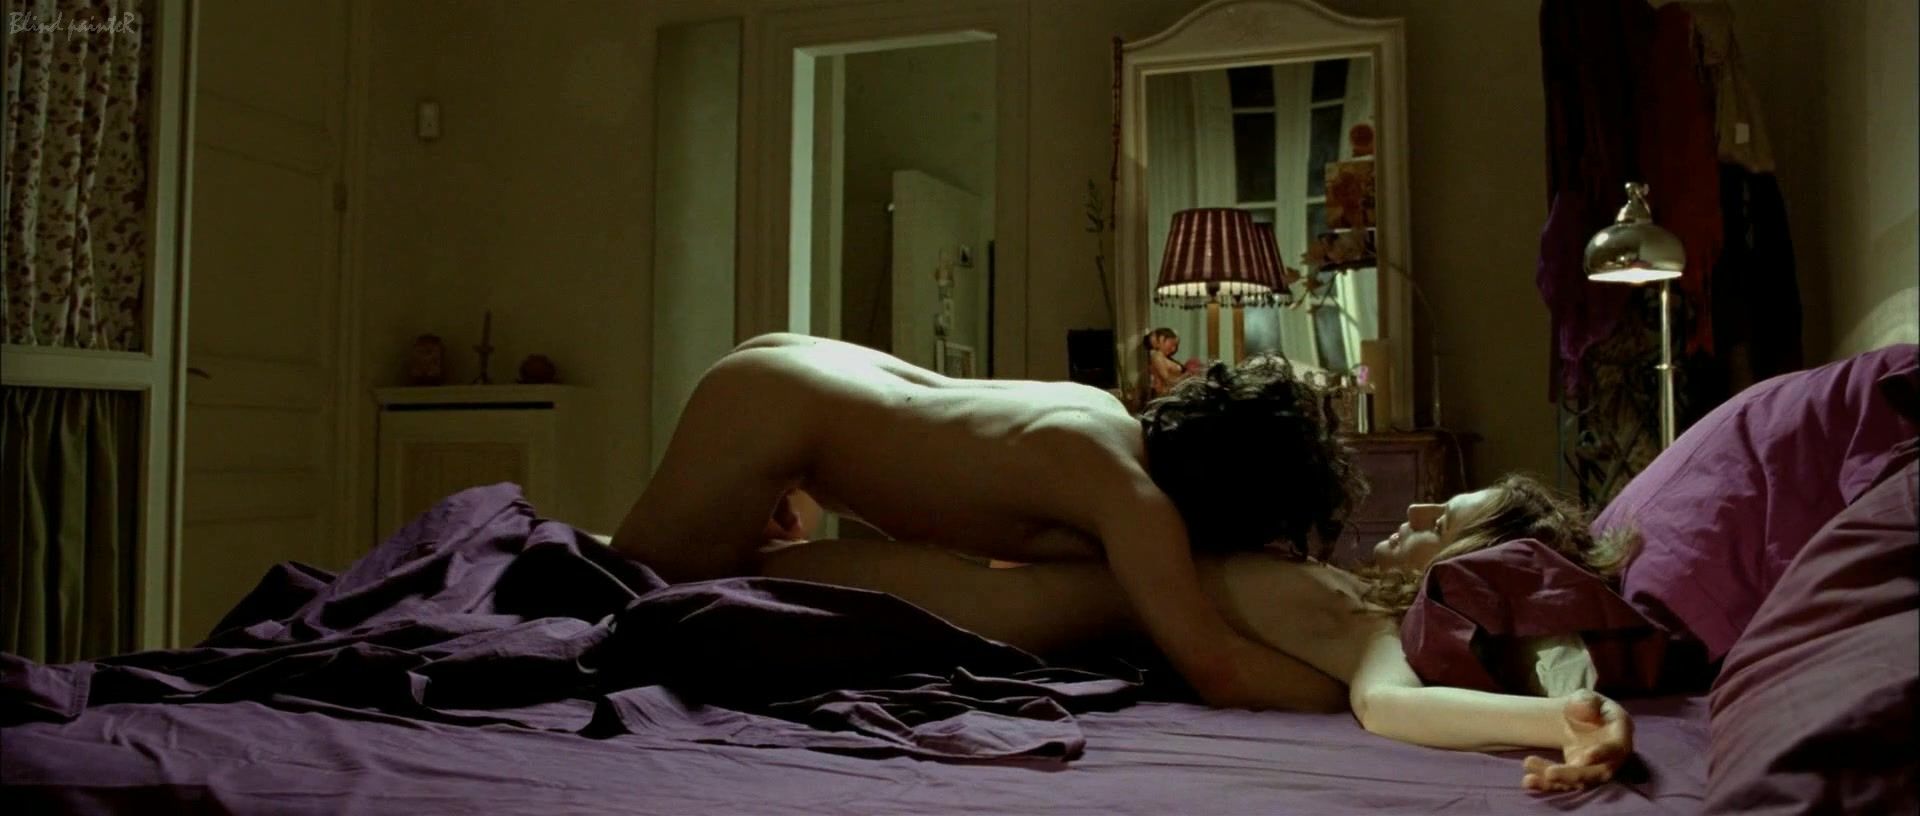 Lezbi Sex Scenes of Belen Fabra & Alba Ribas from the movie "Diary Of A Nymphomaniac" (2008) Slut Porn - 2